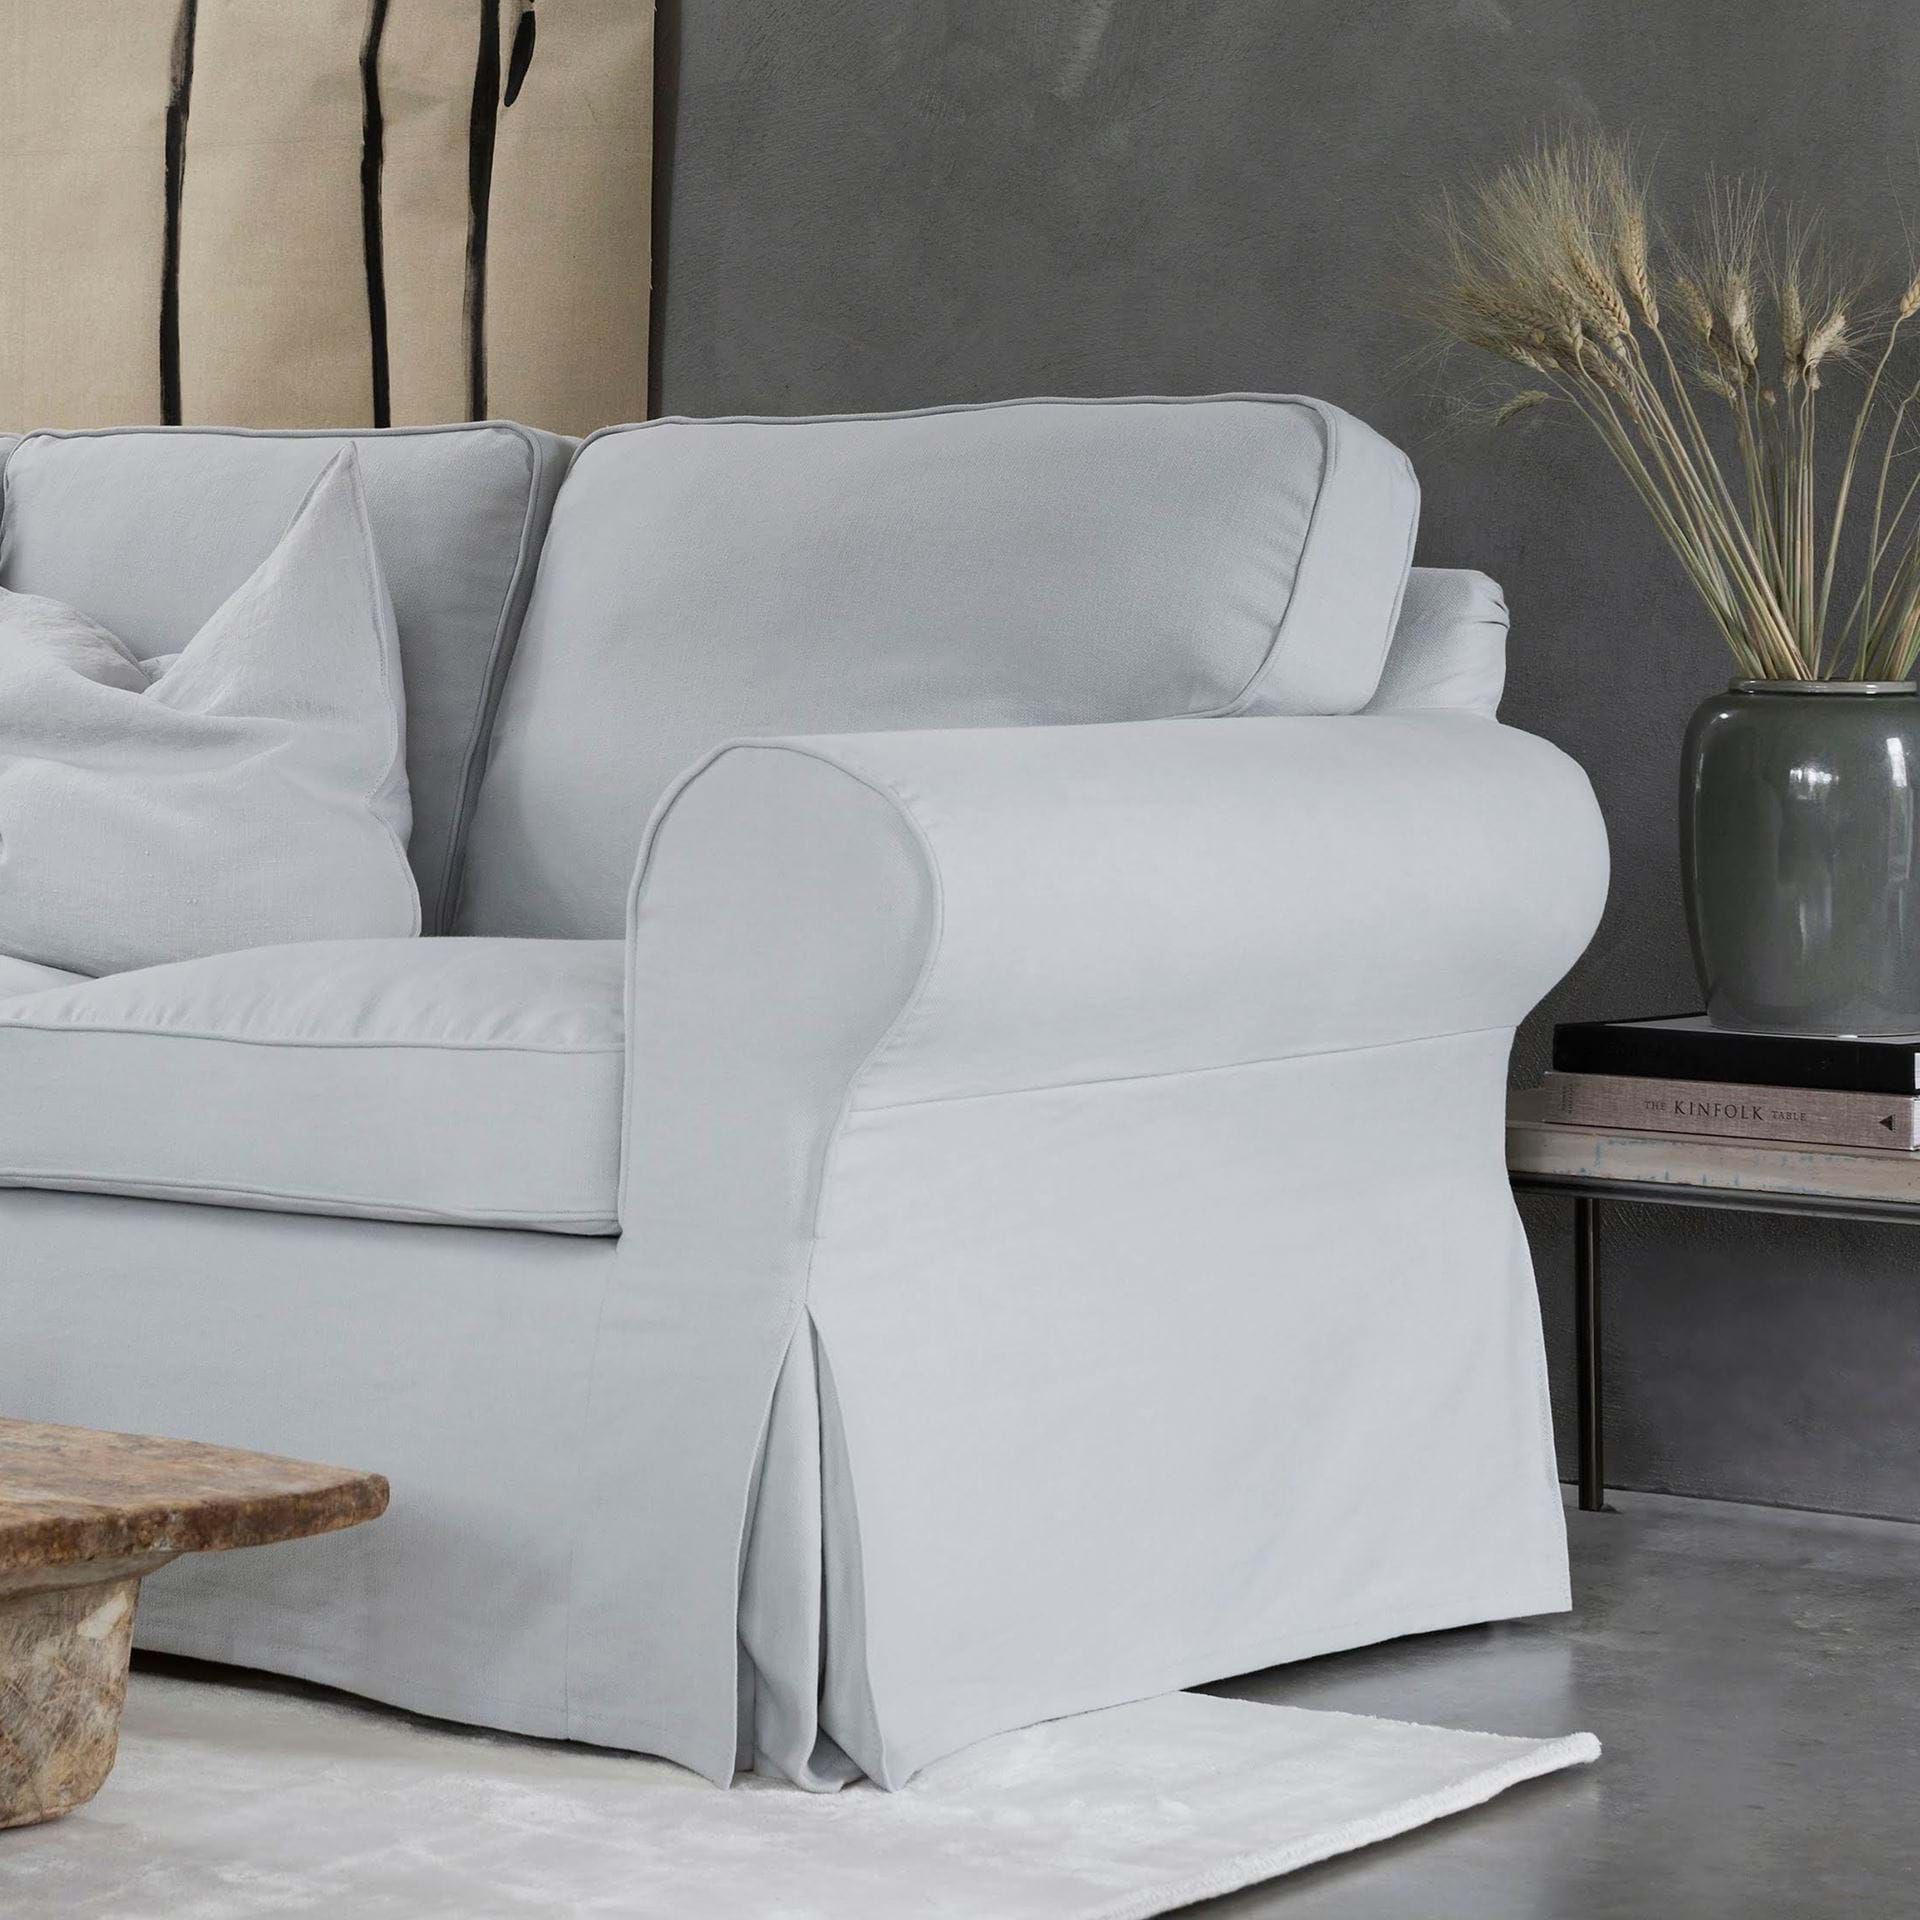 Ikea Ektorp 2 Seater Sofa Cover With Piping Bemz Bemz